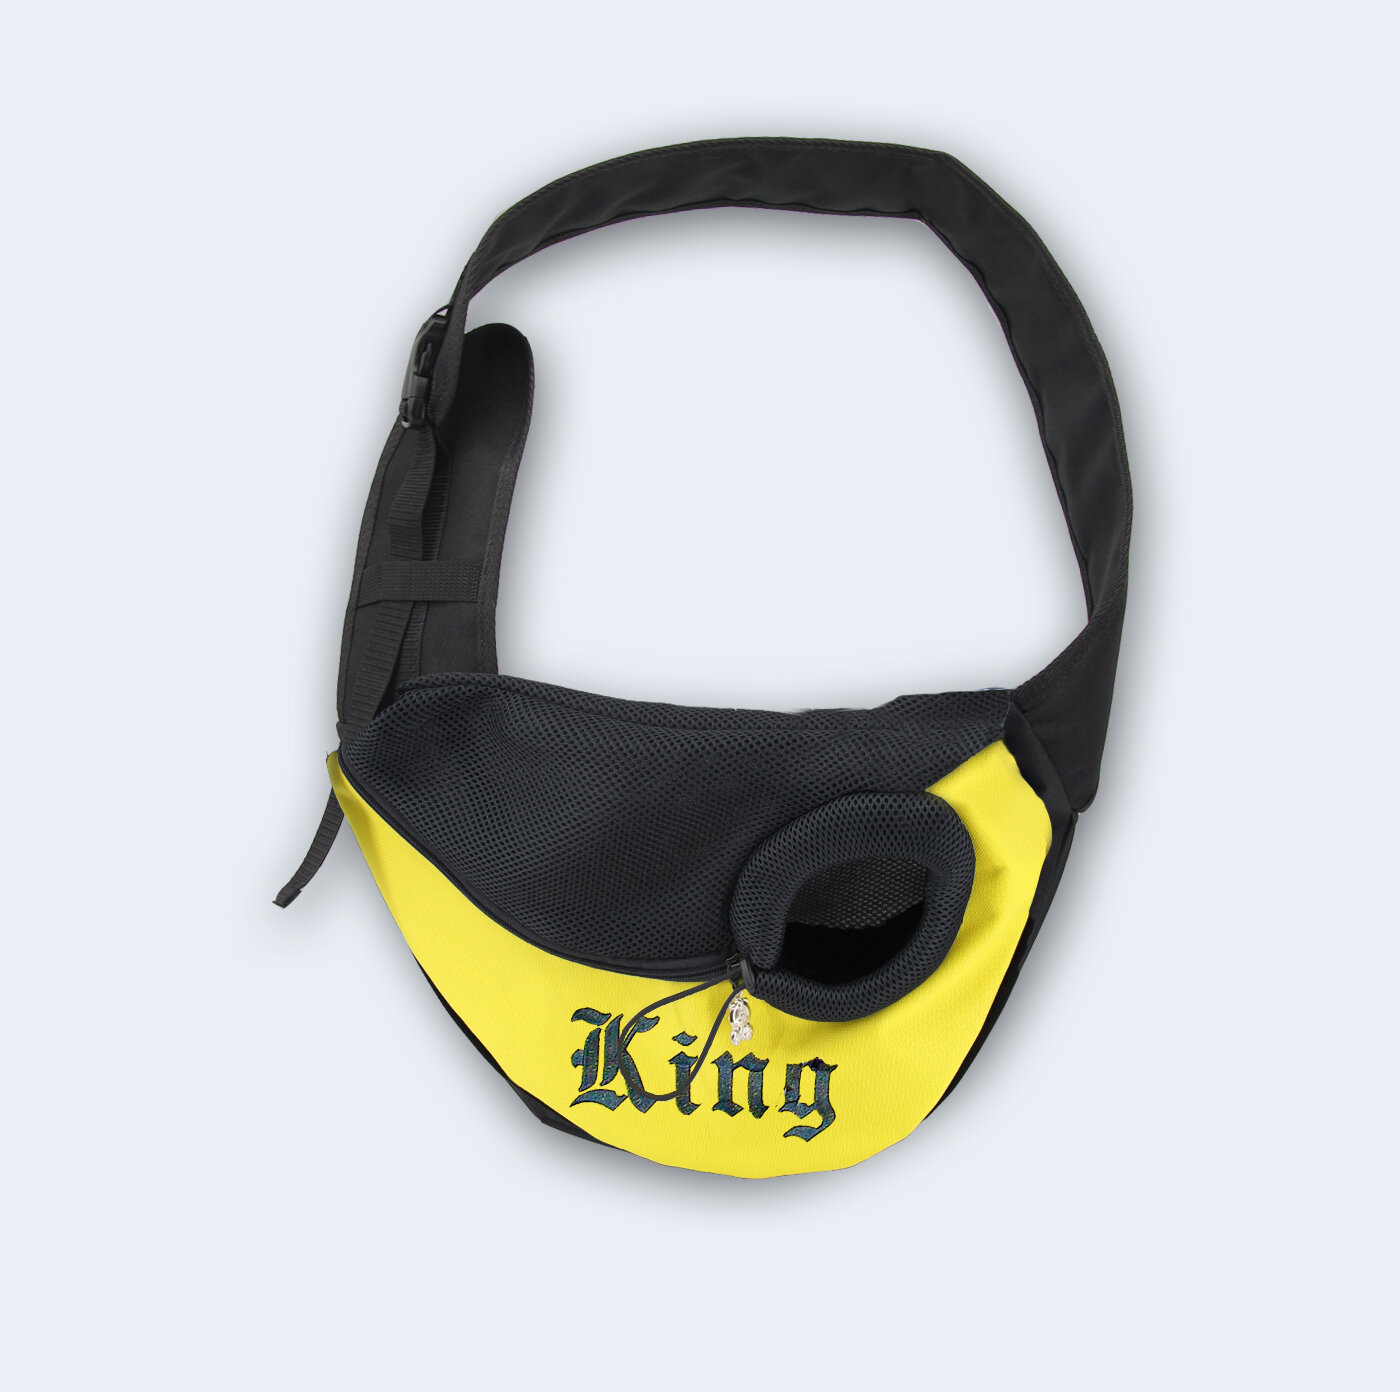 Слинг для животных Melenni Стандарт King XS желтый/черная сетка, 33Х19Х9, см; Вес: 220 гр.